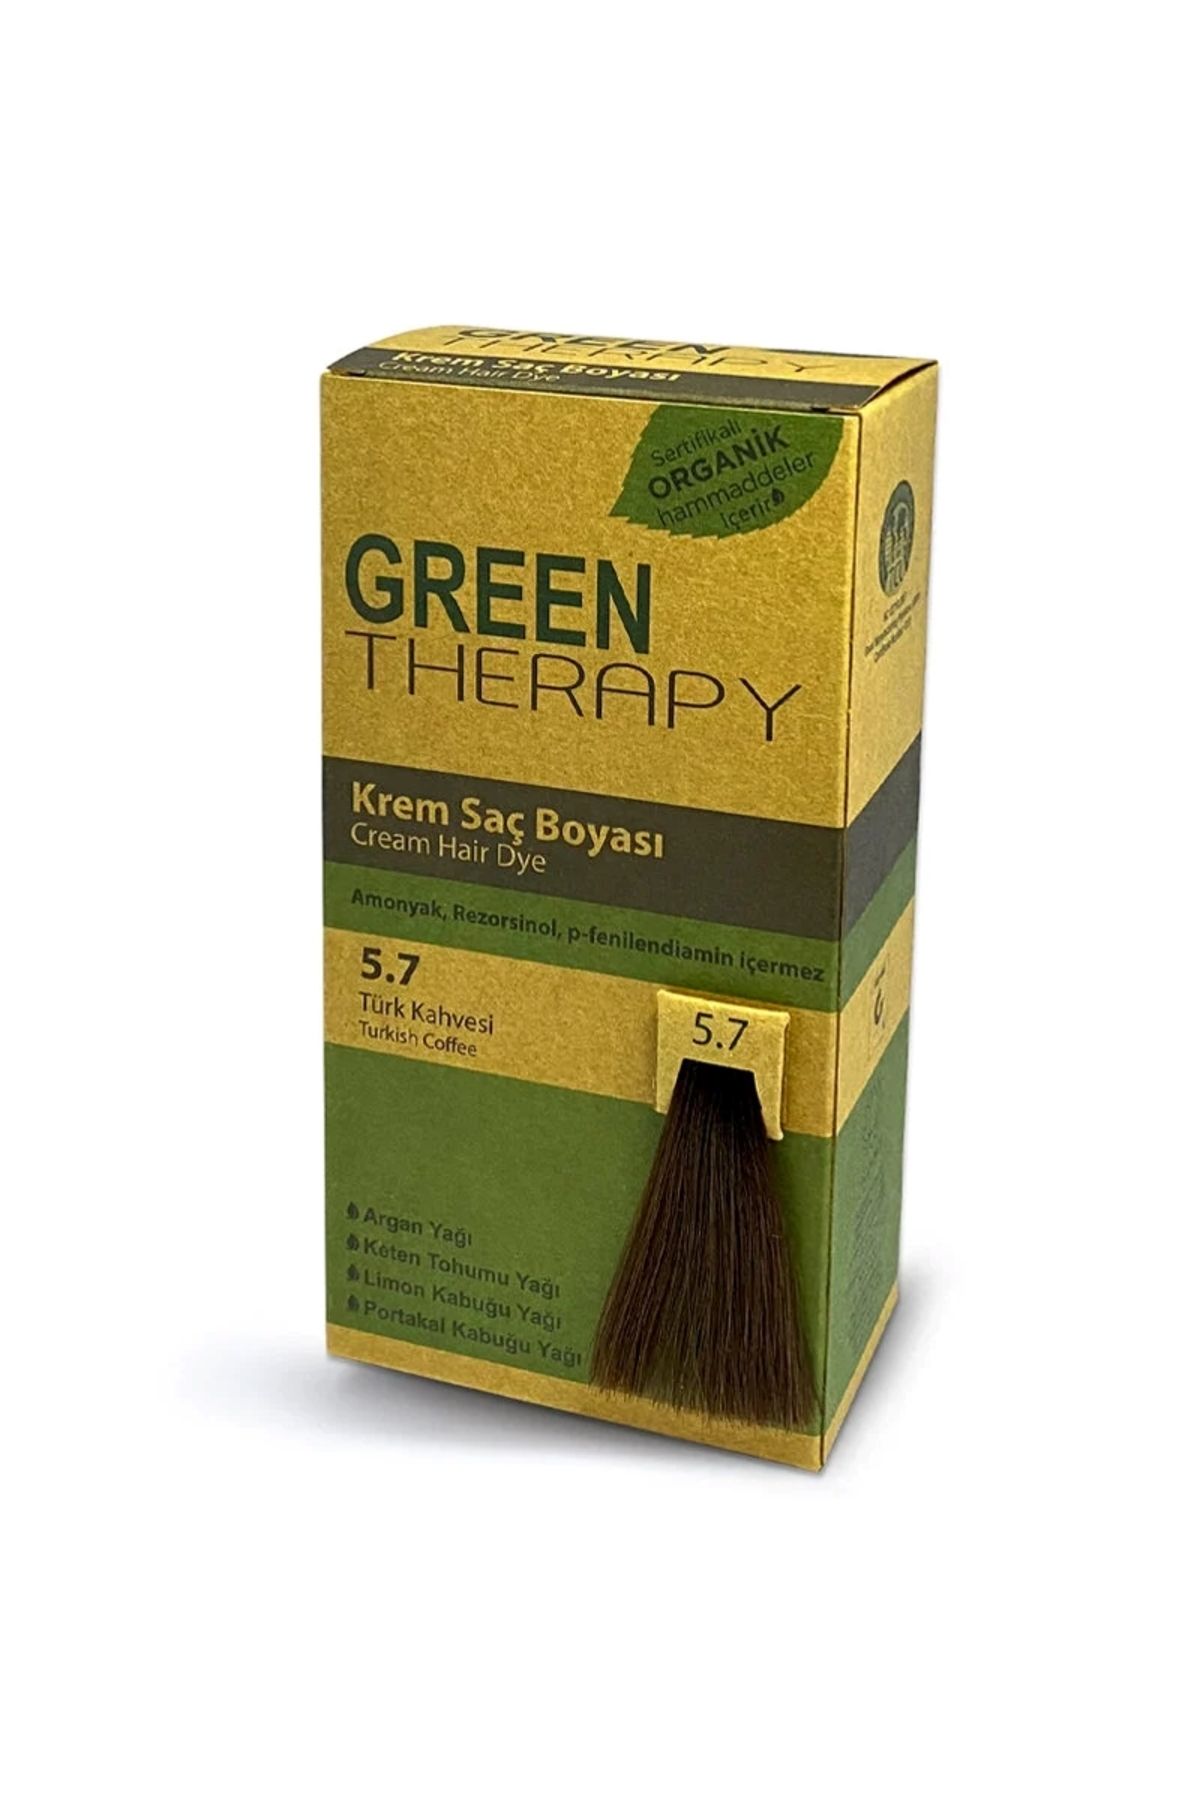 Green Therapy Krem Saç Boyası